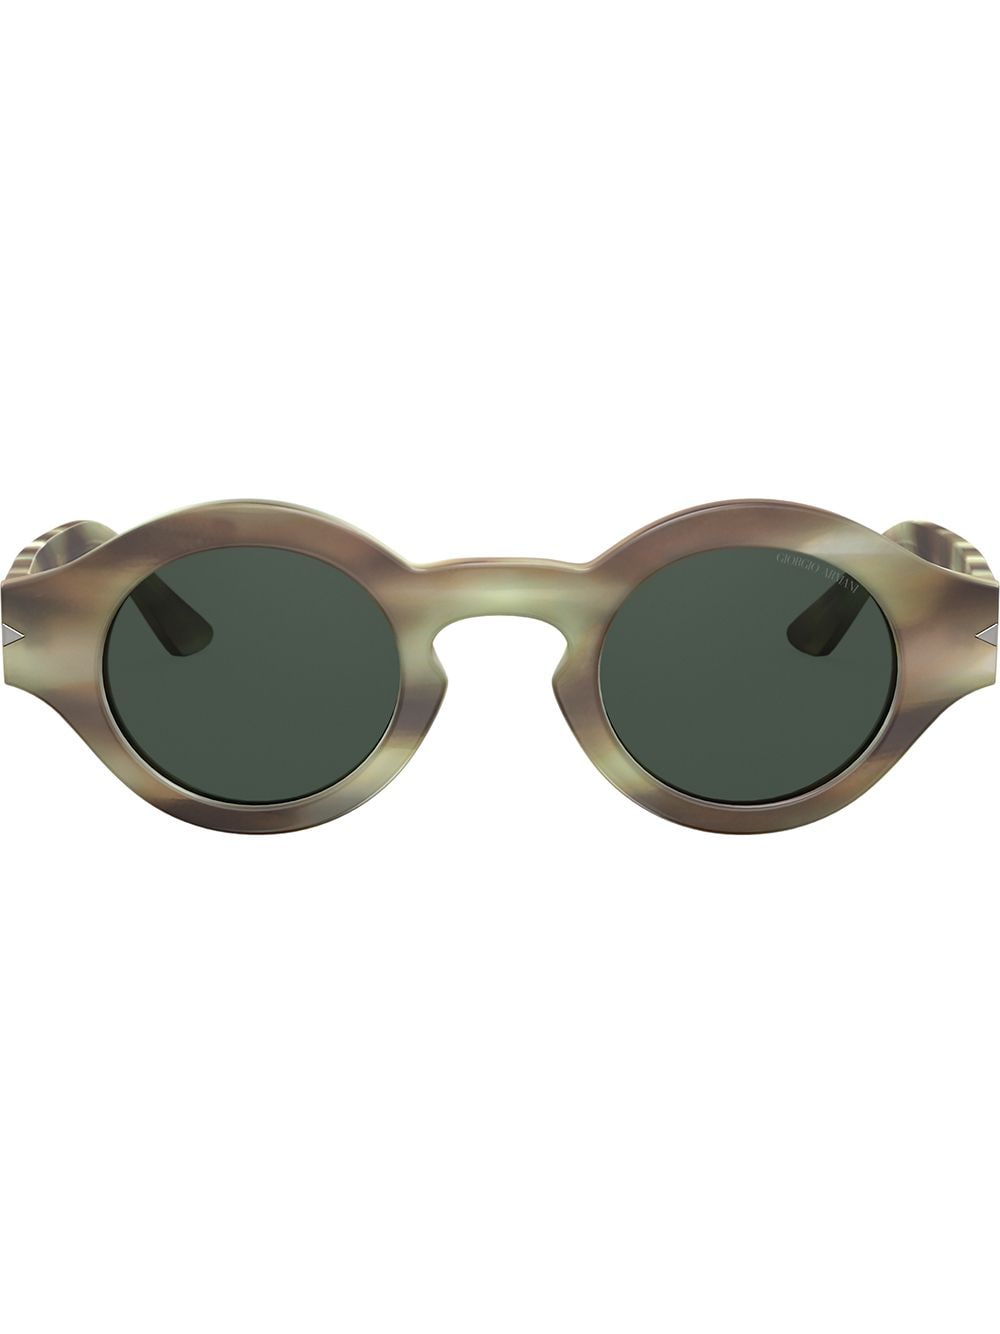 printed circle frame sunglasses